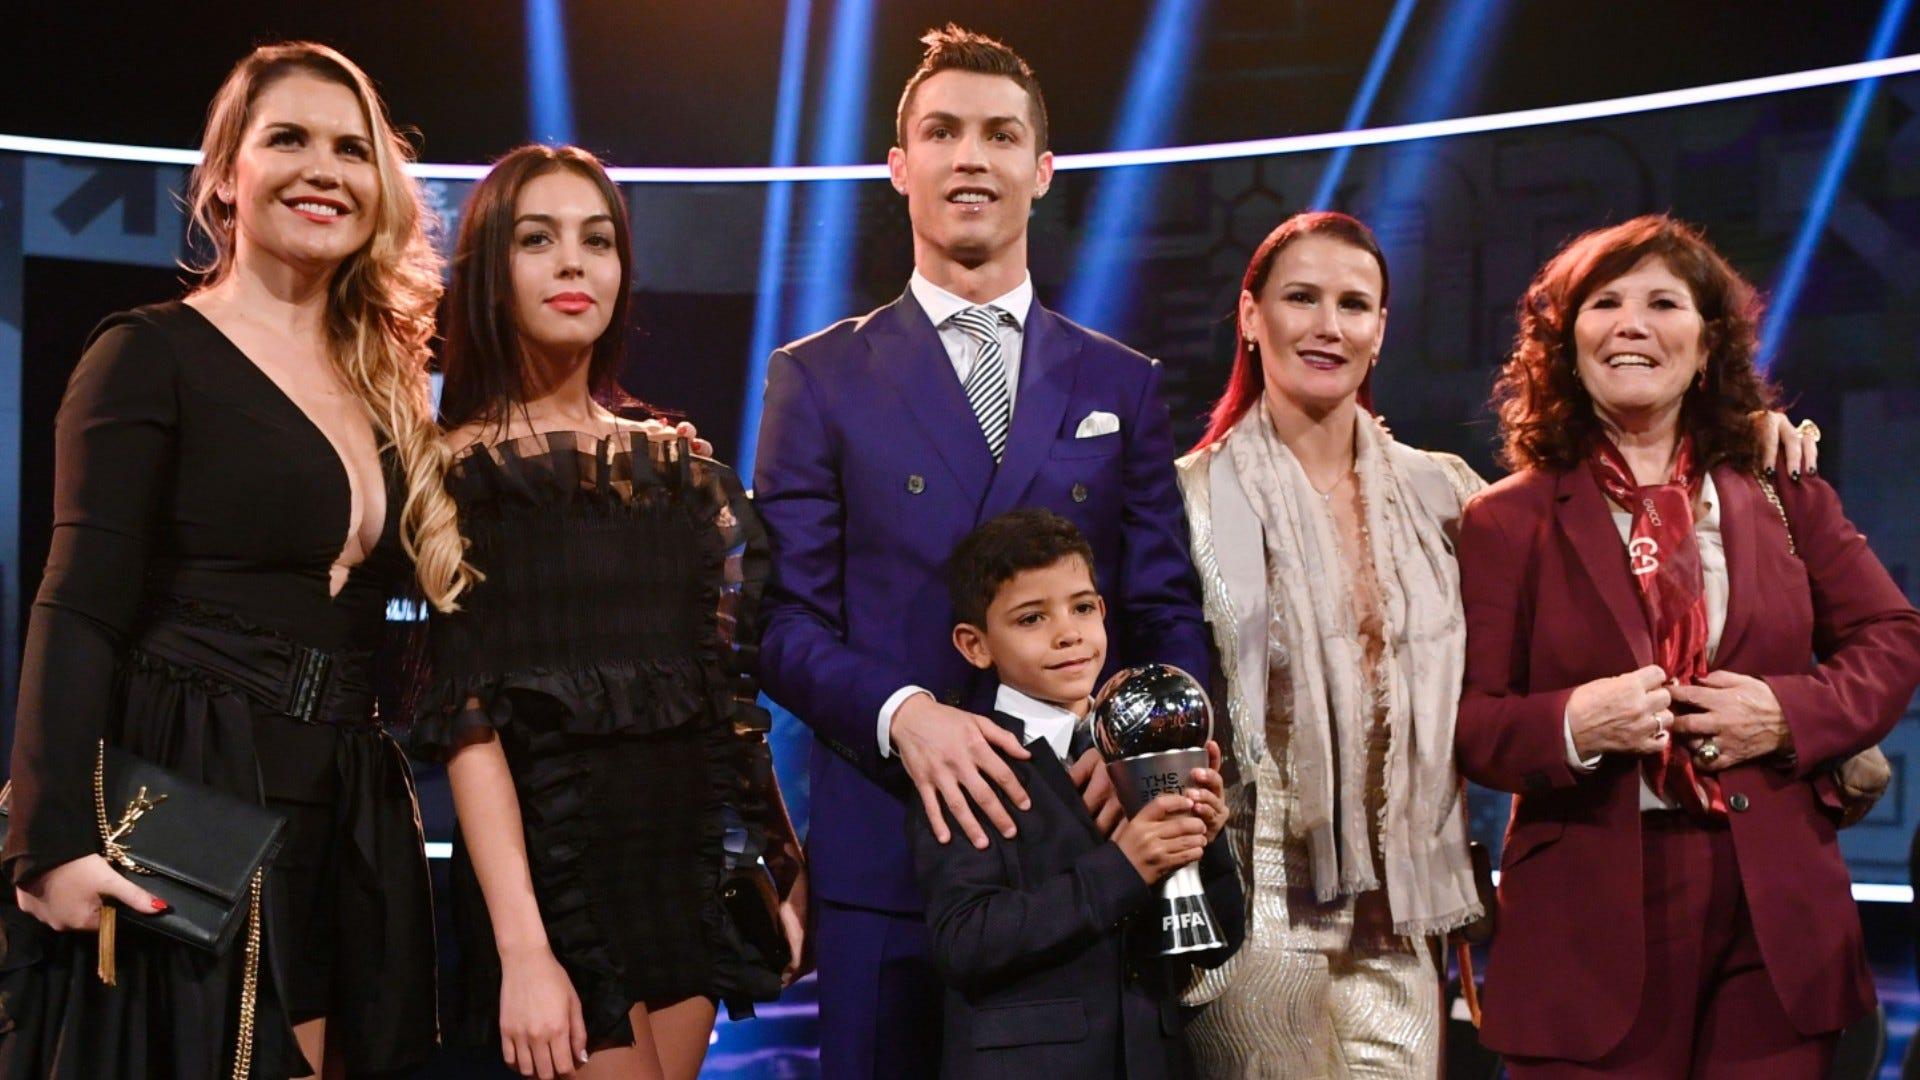 Cristiano Ronaldo’s Sisters: A Closer Look at the Football Star’s Family